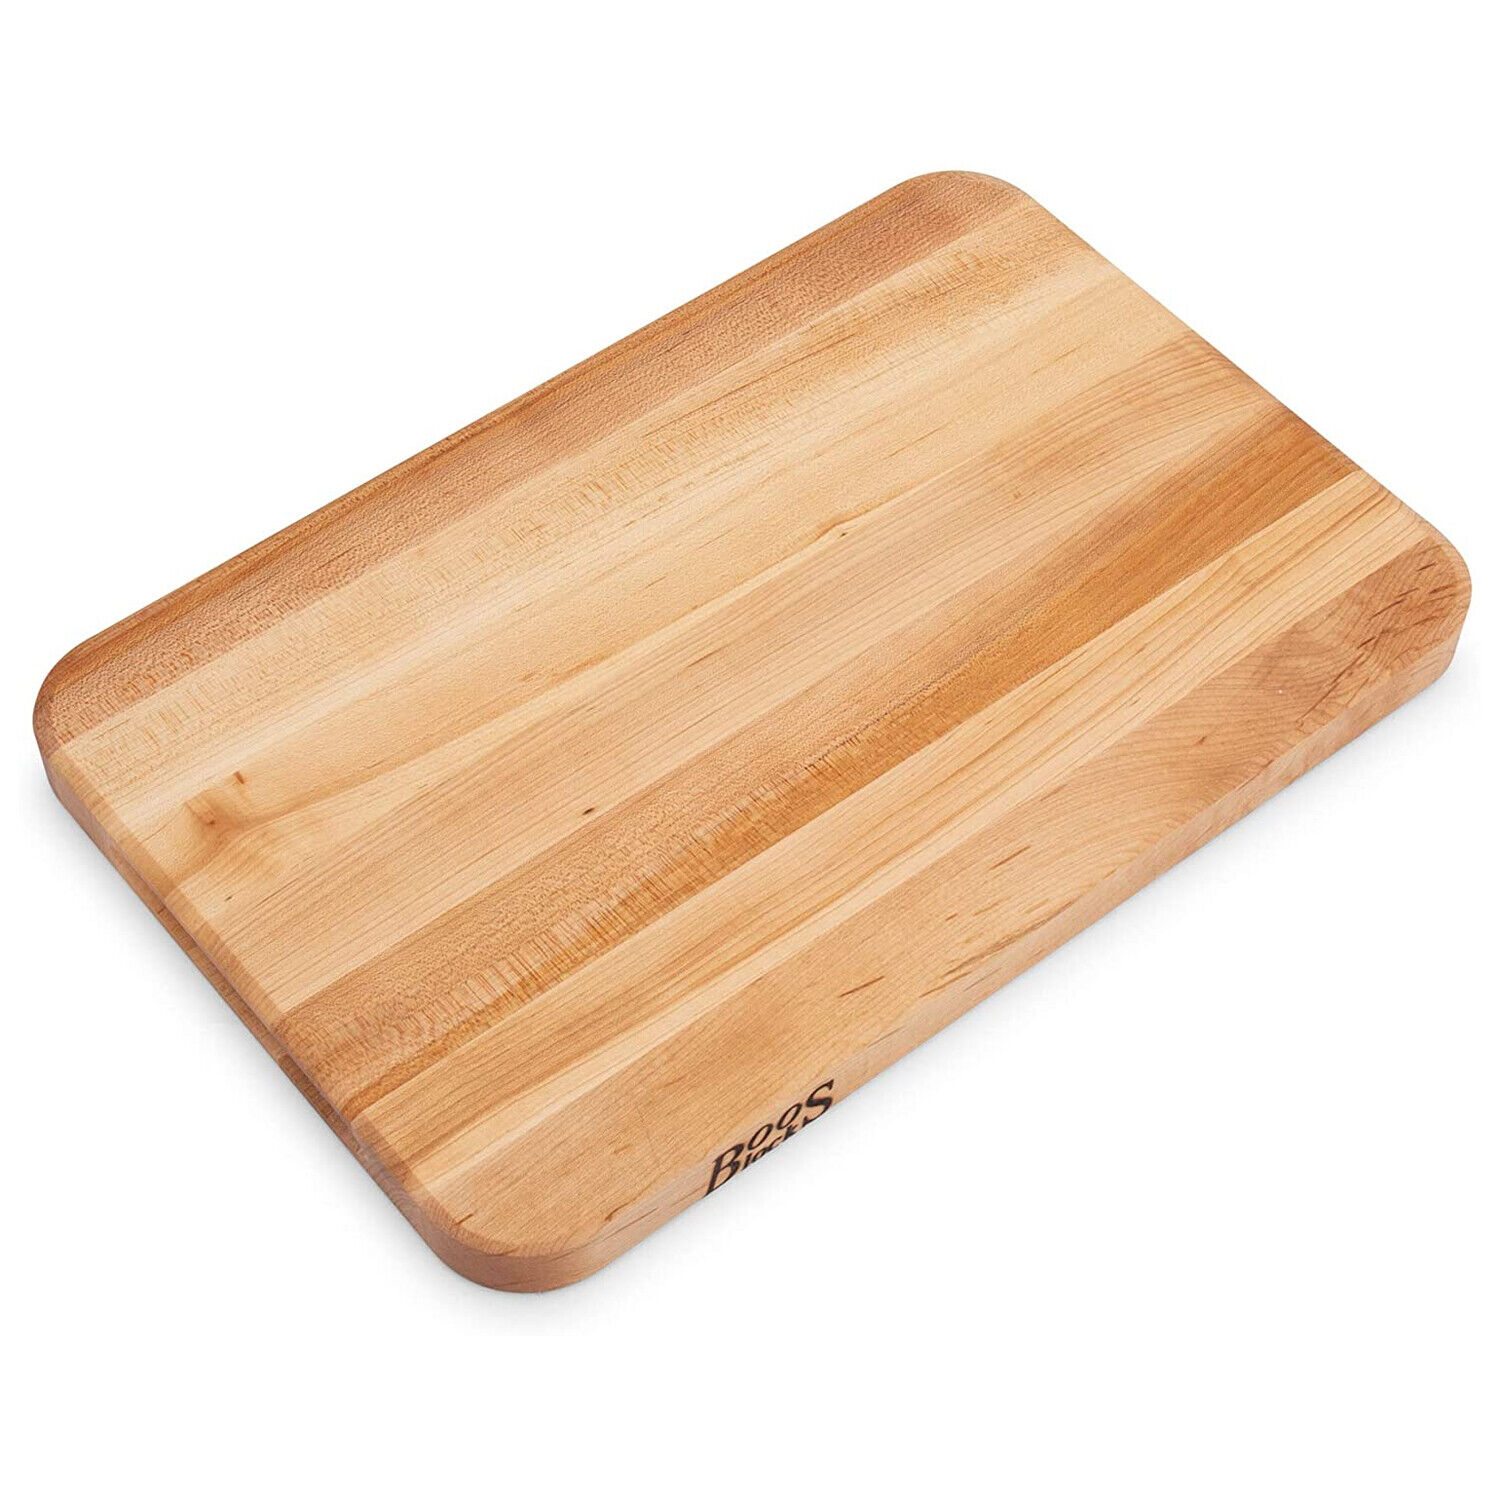 John Boos Chop-N-Slice Wood Cutting Board with Finger Grips, Maple 